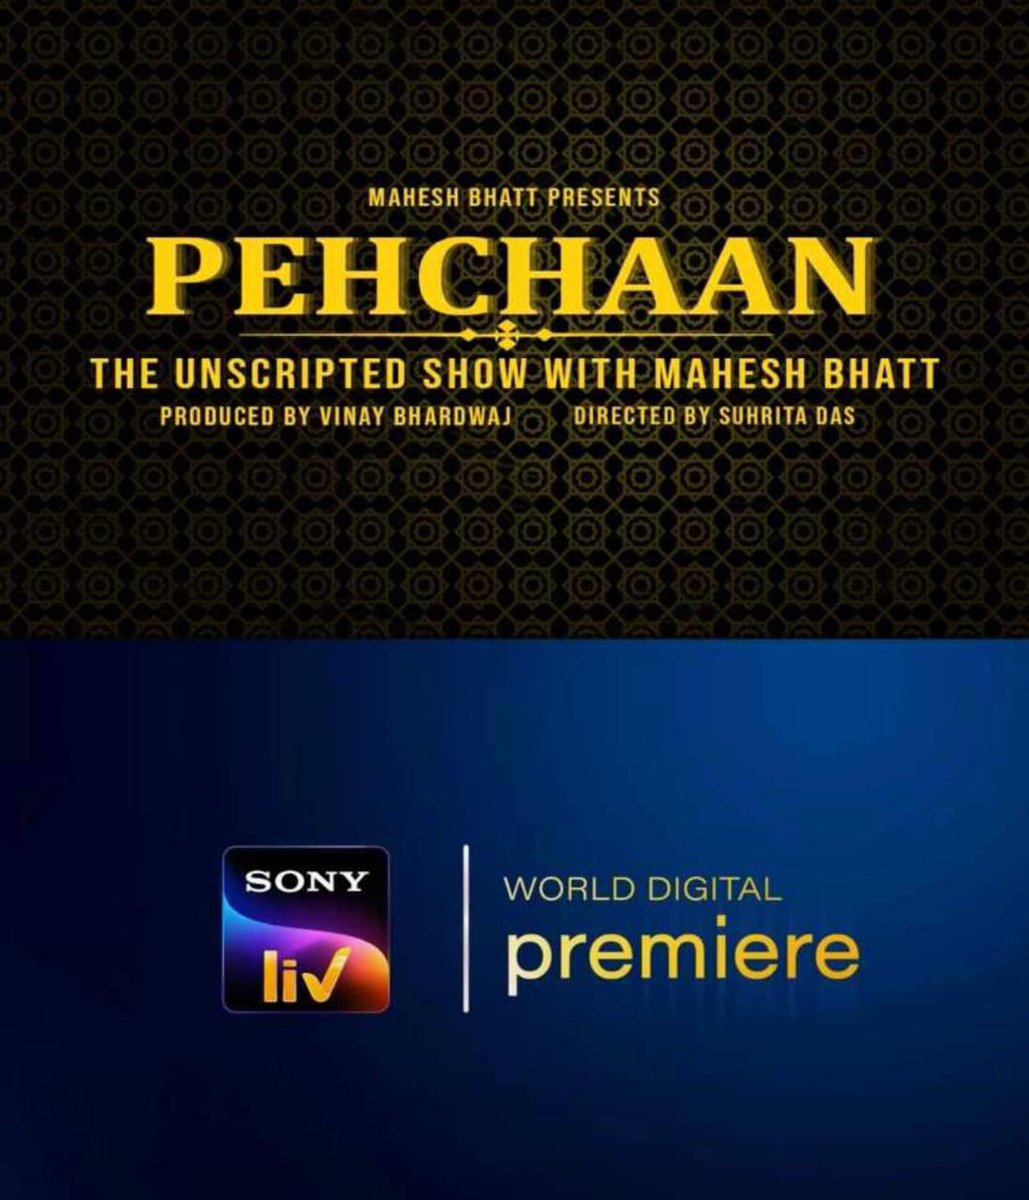 Congratulations @SonyLIV for having such an amazing show by @MaheshNBhatt and #vinaybhardwaj #pehchaan